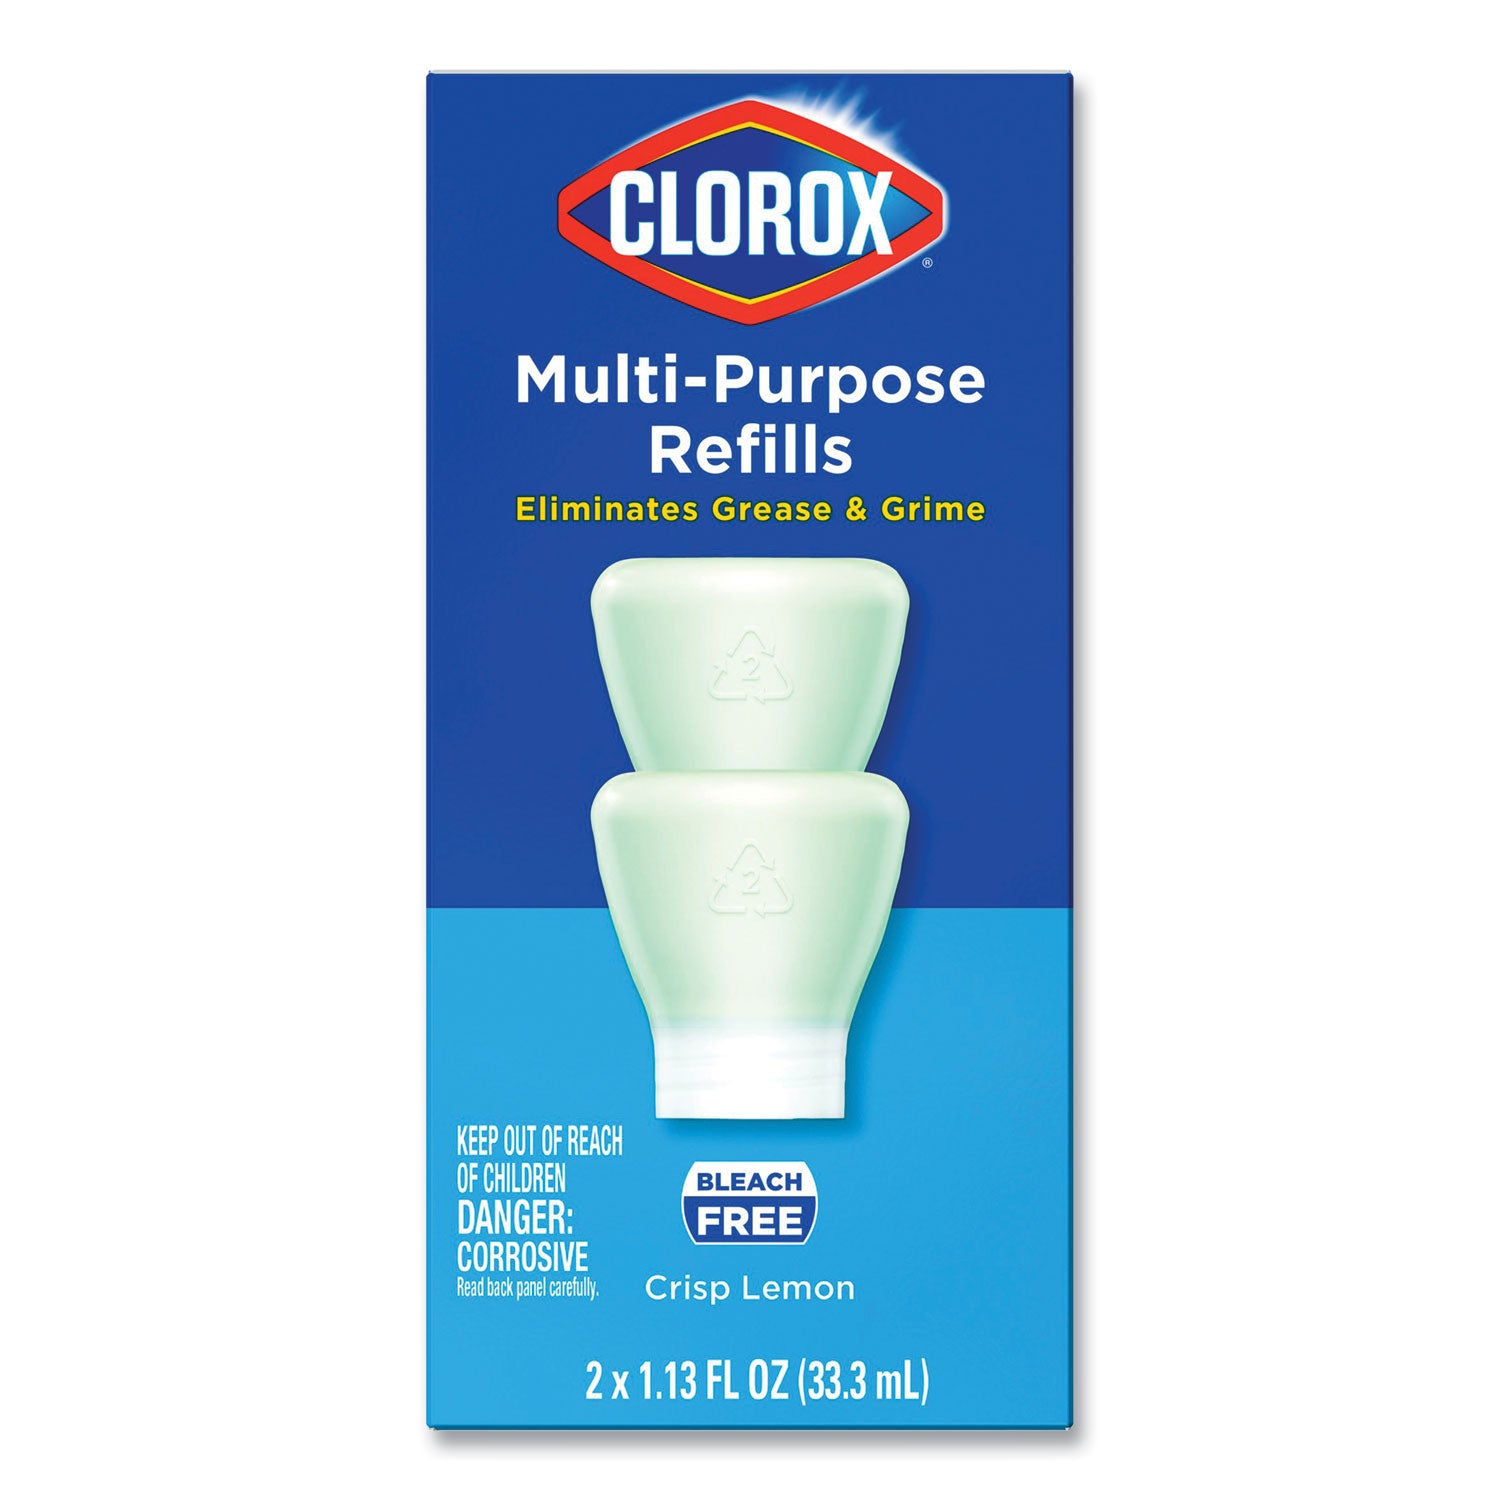 clorox-multipurpose-degreaser-cleaner-refill-pods-crisp-lemon-scent-2-pods-box-8-boxes-carton_clo60161 - 4